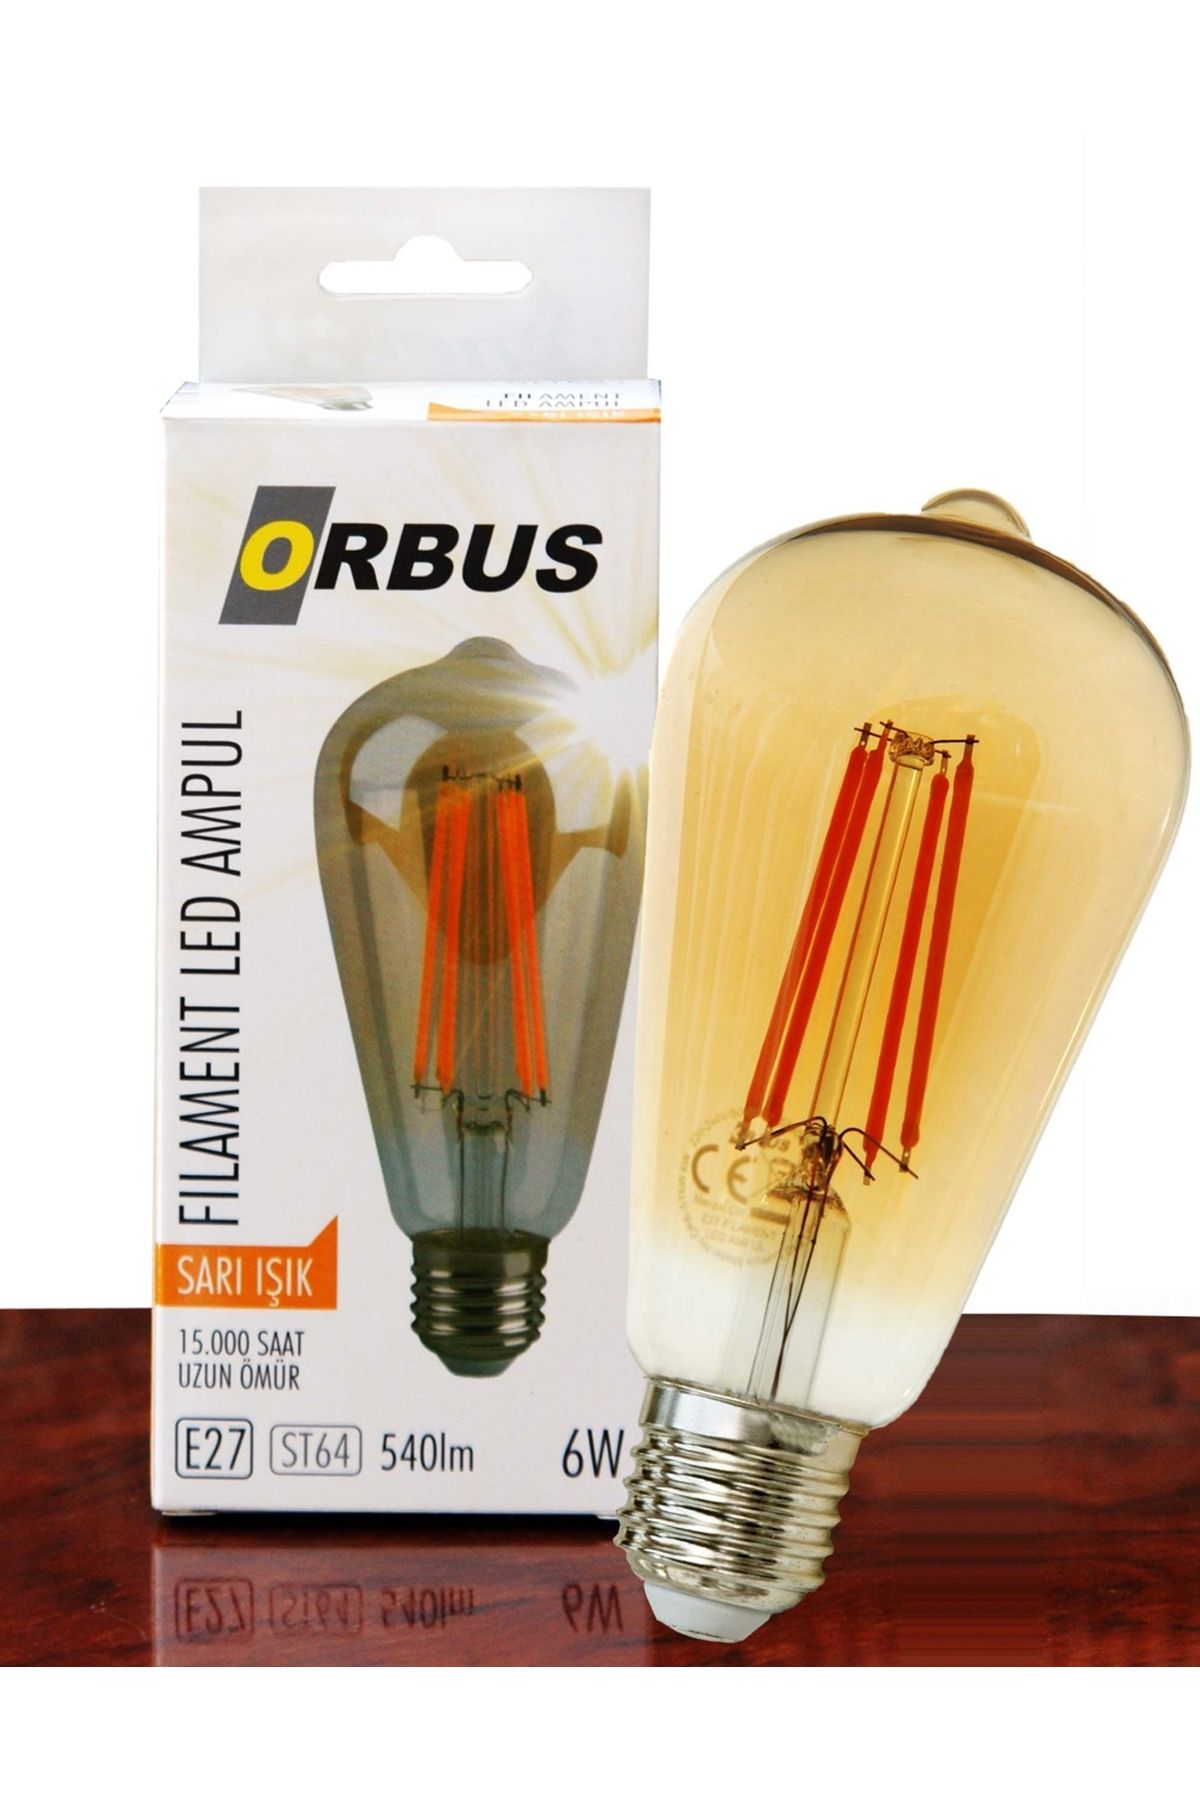 ORBUS Orb-St6w 6w Sarı Işık E27 A60 540lm 15.000 Saat Fılamnet Led Ampul